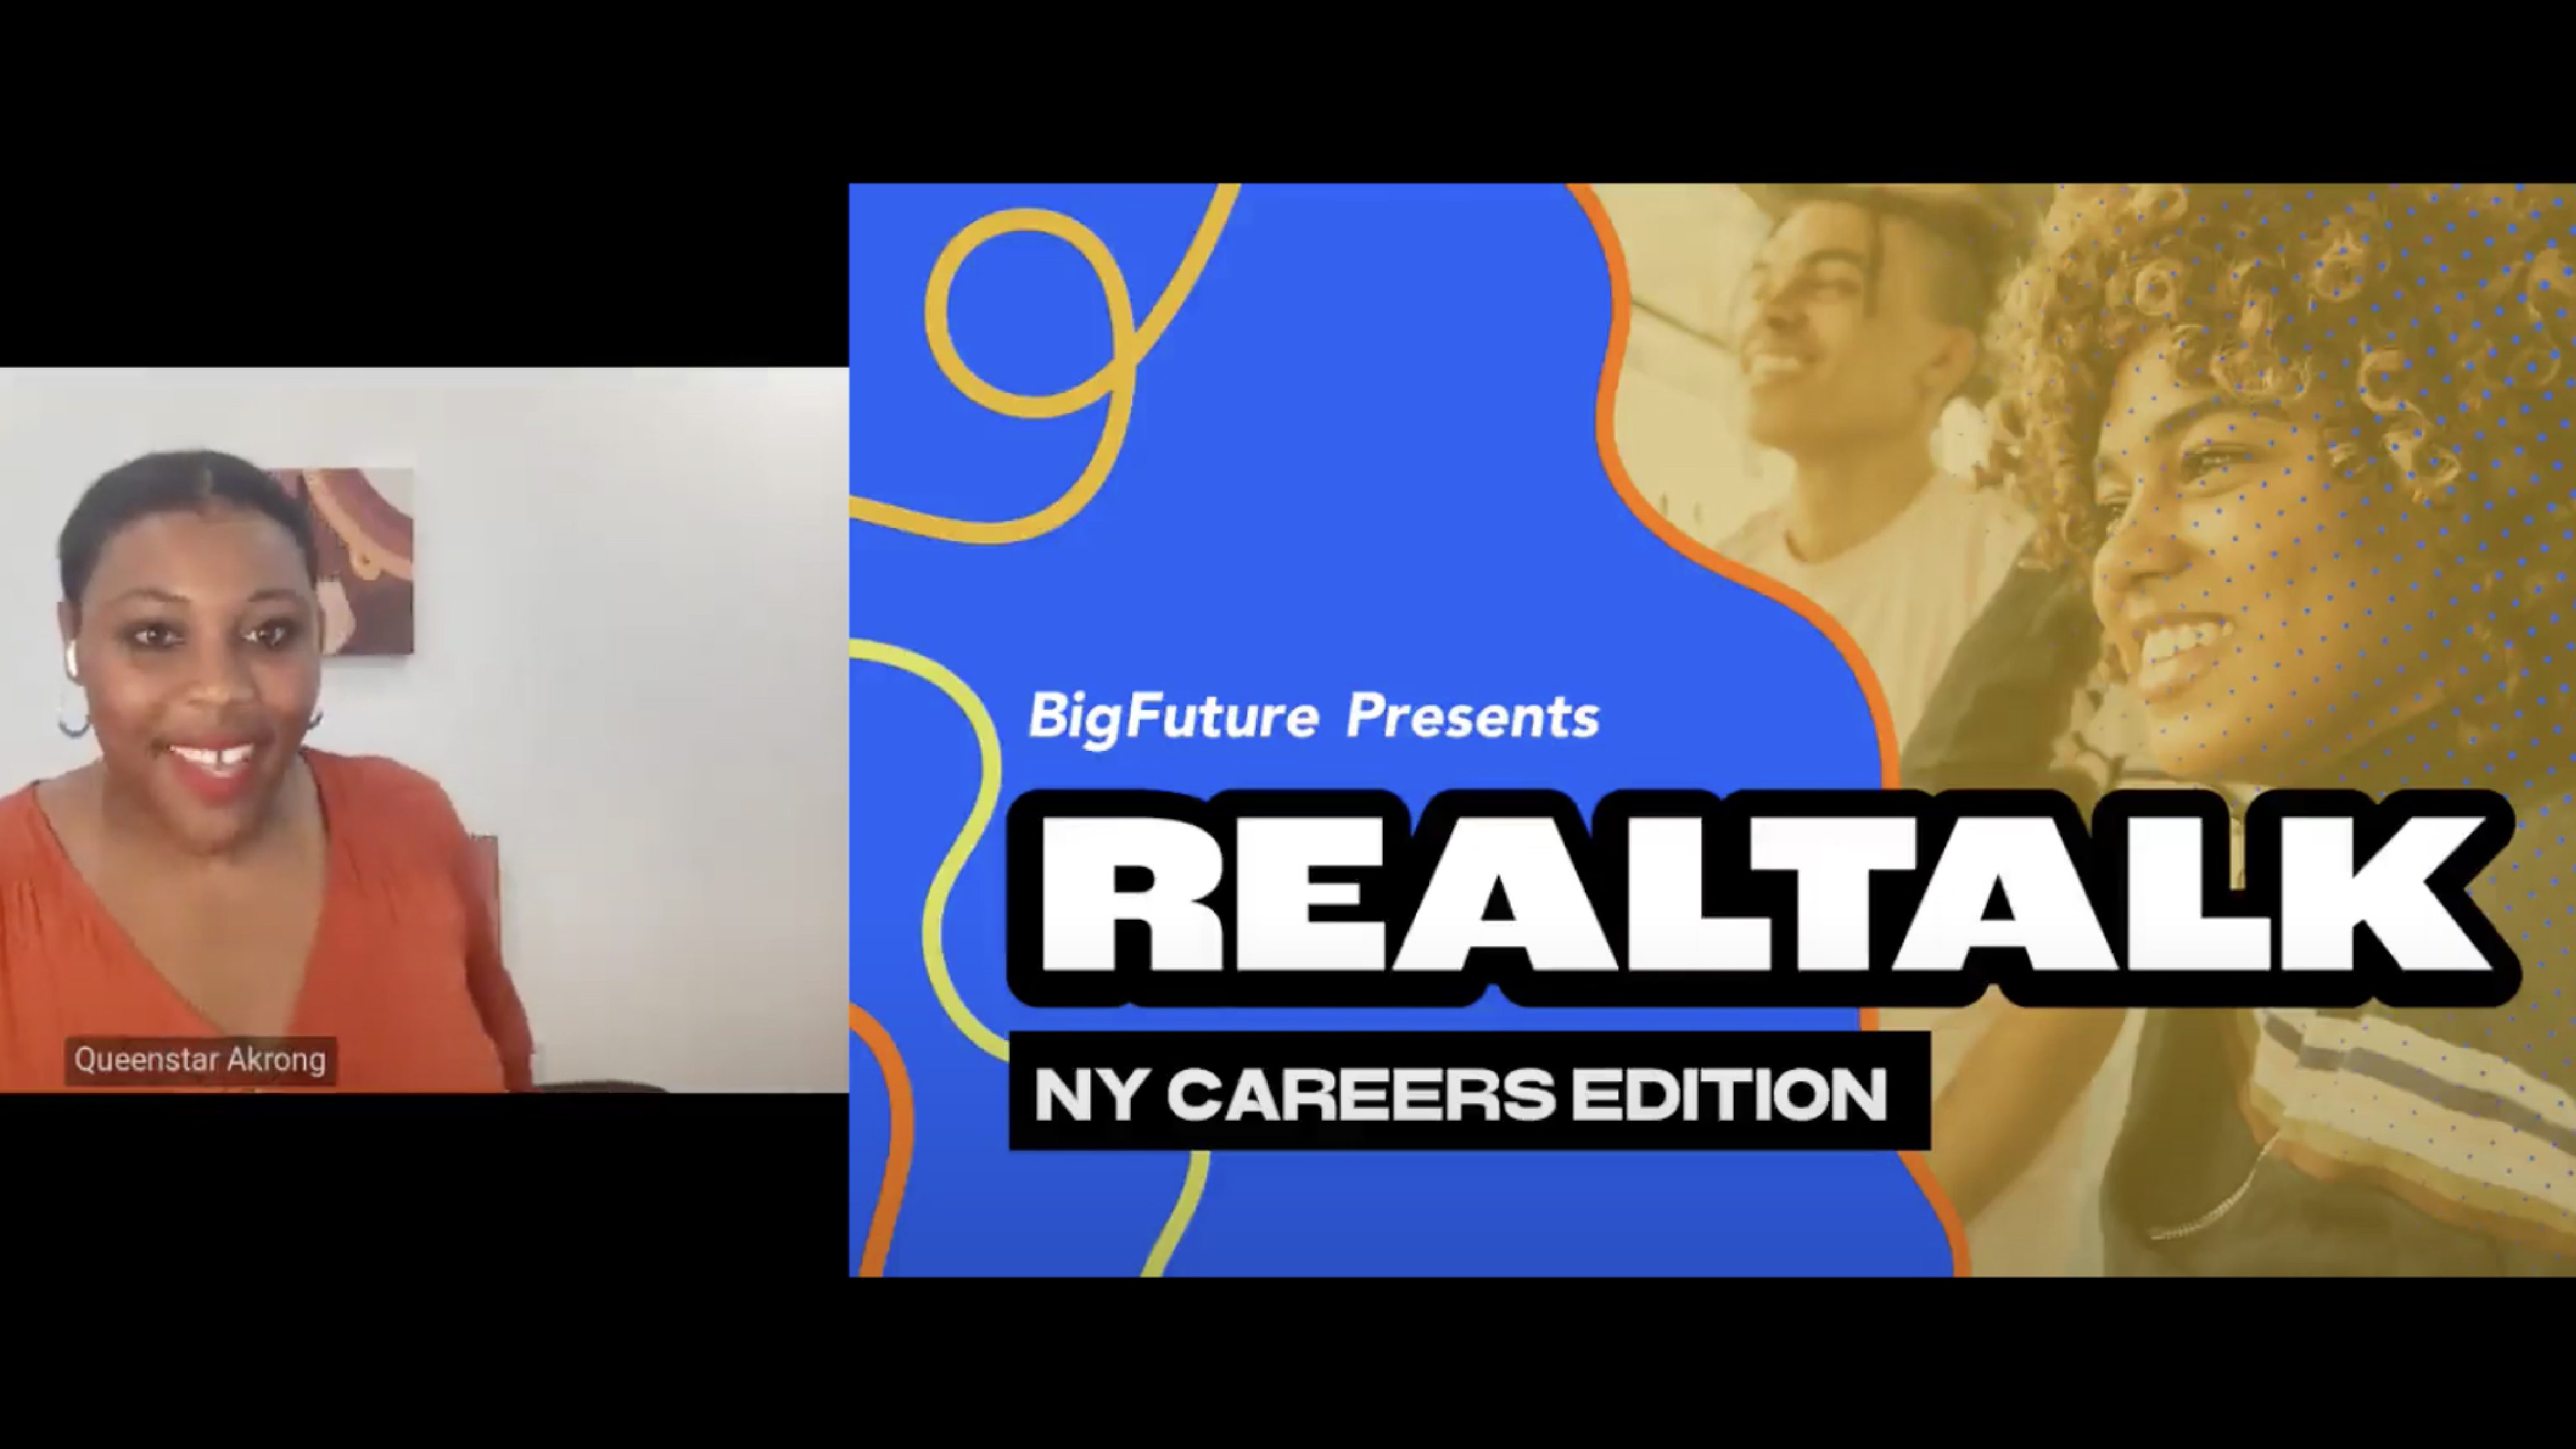 BigFuture Presents Real Talk NY Careers Edition